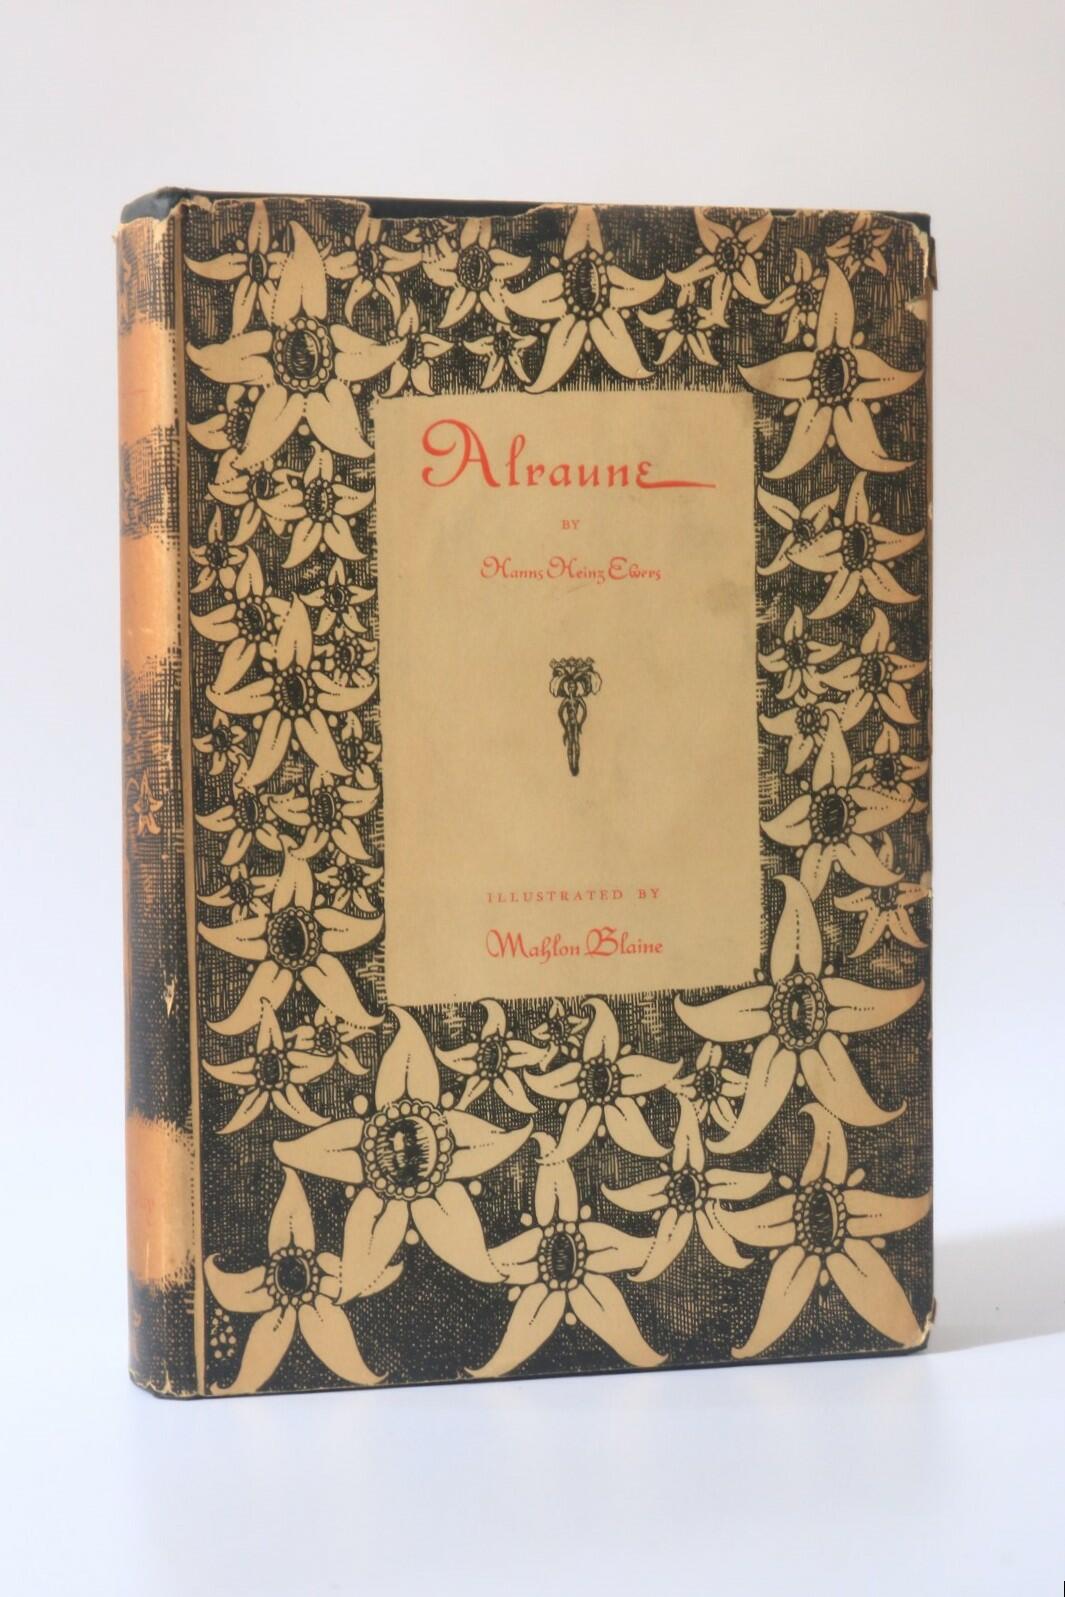 Hanns Heinz Ewers - Alraune - John Day, 1929, First Edition.